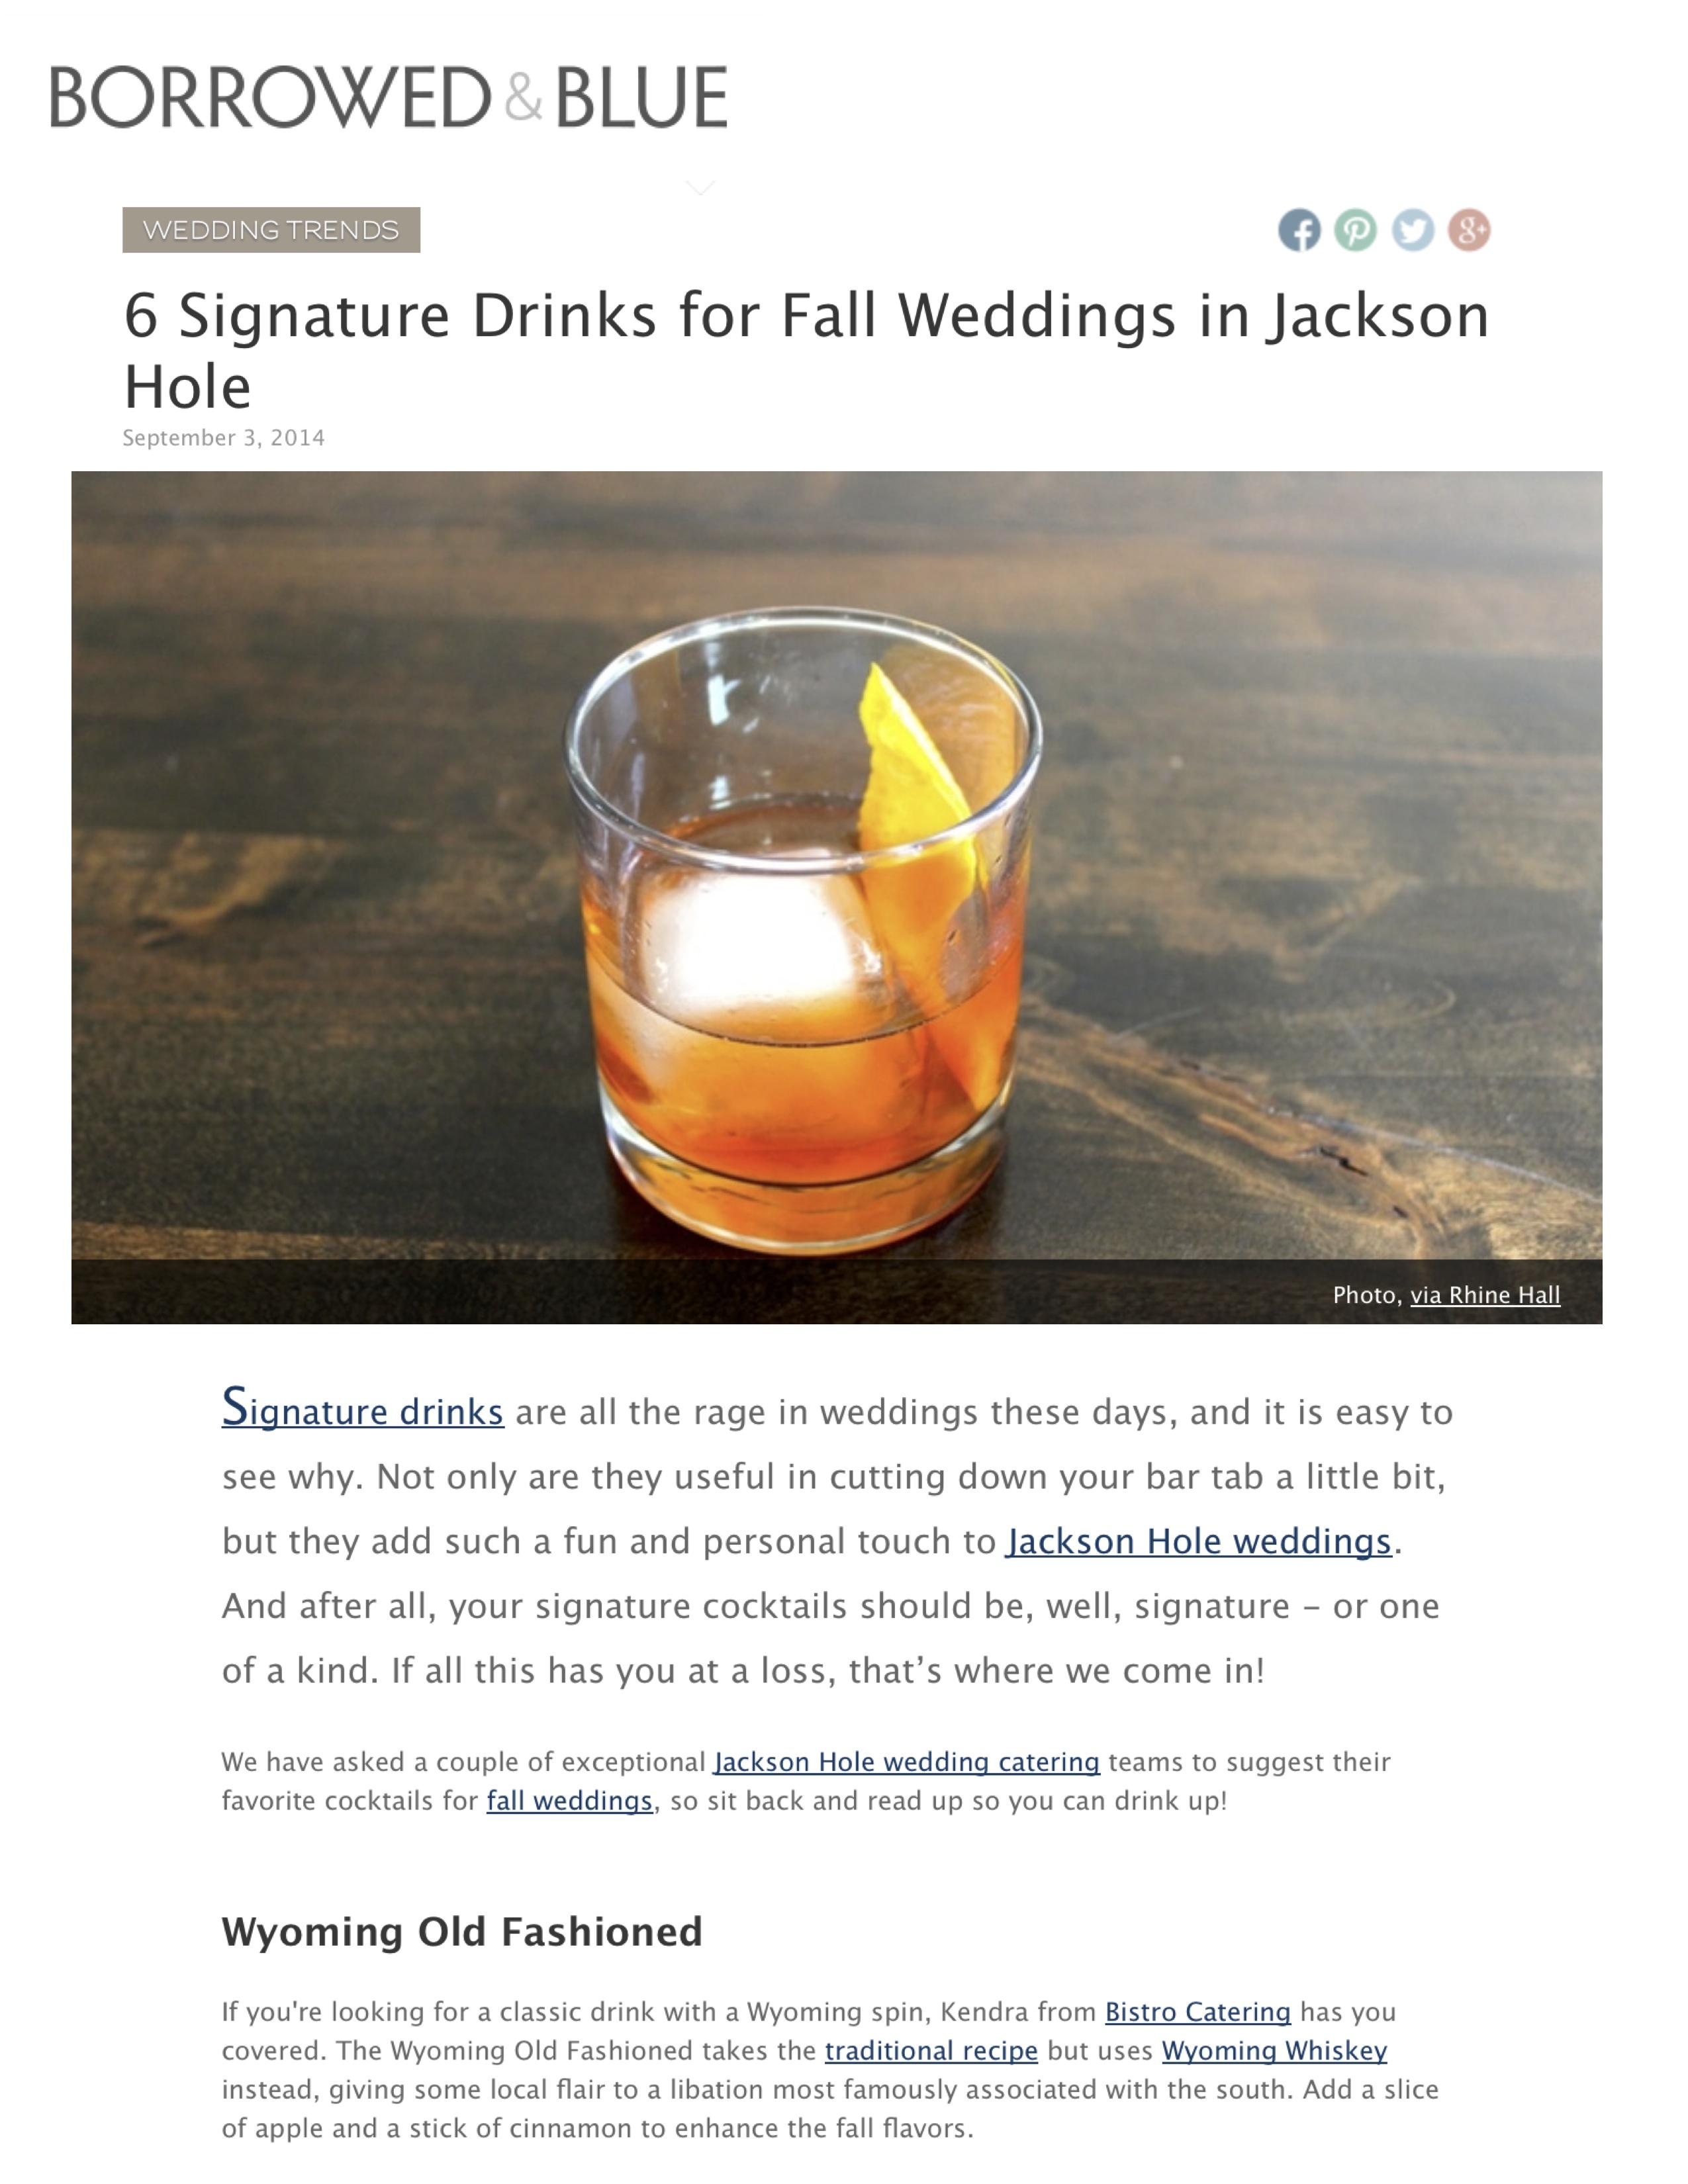 6 Signature Cocktails for Fall Jackson Hole Weddings